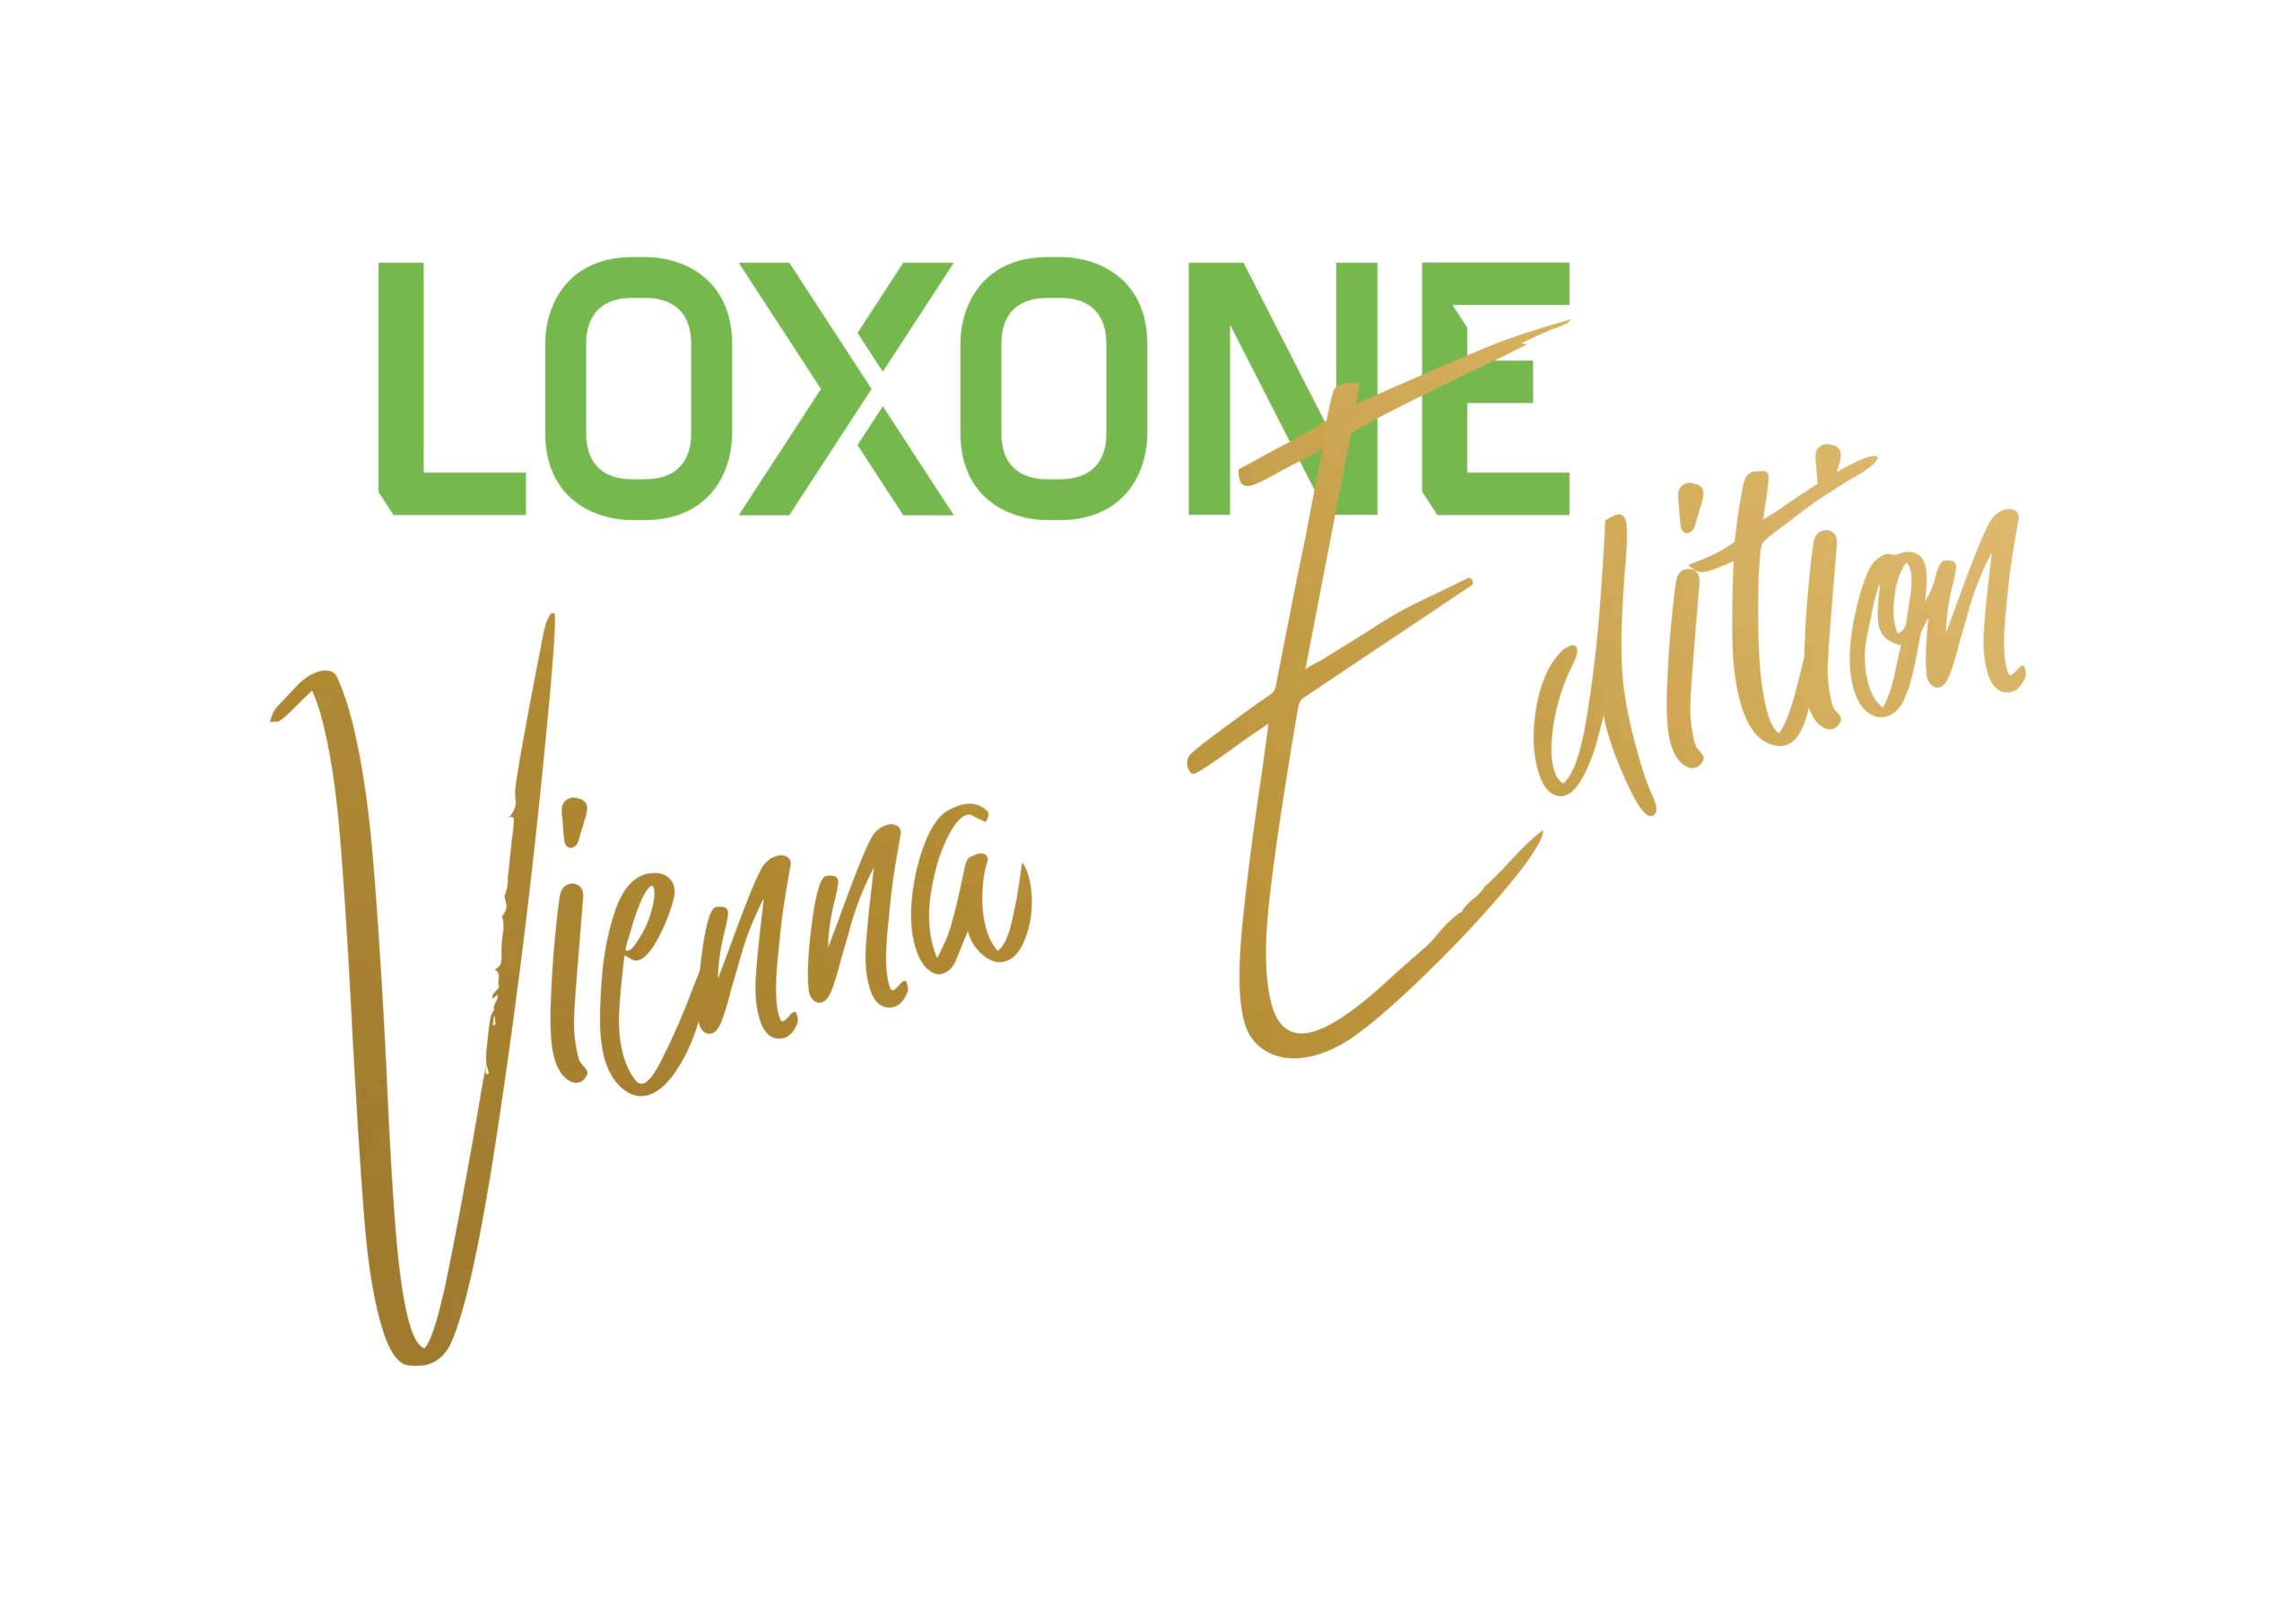 Vienna Edition Loxone